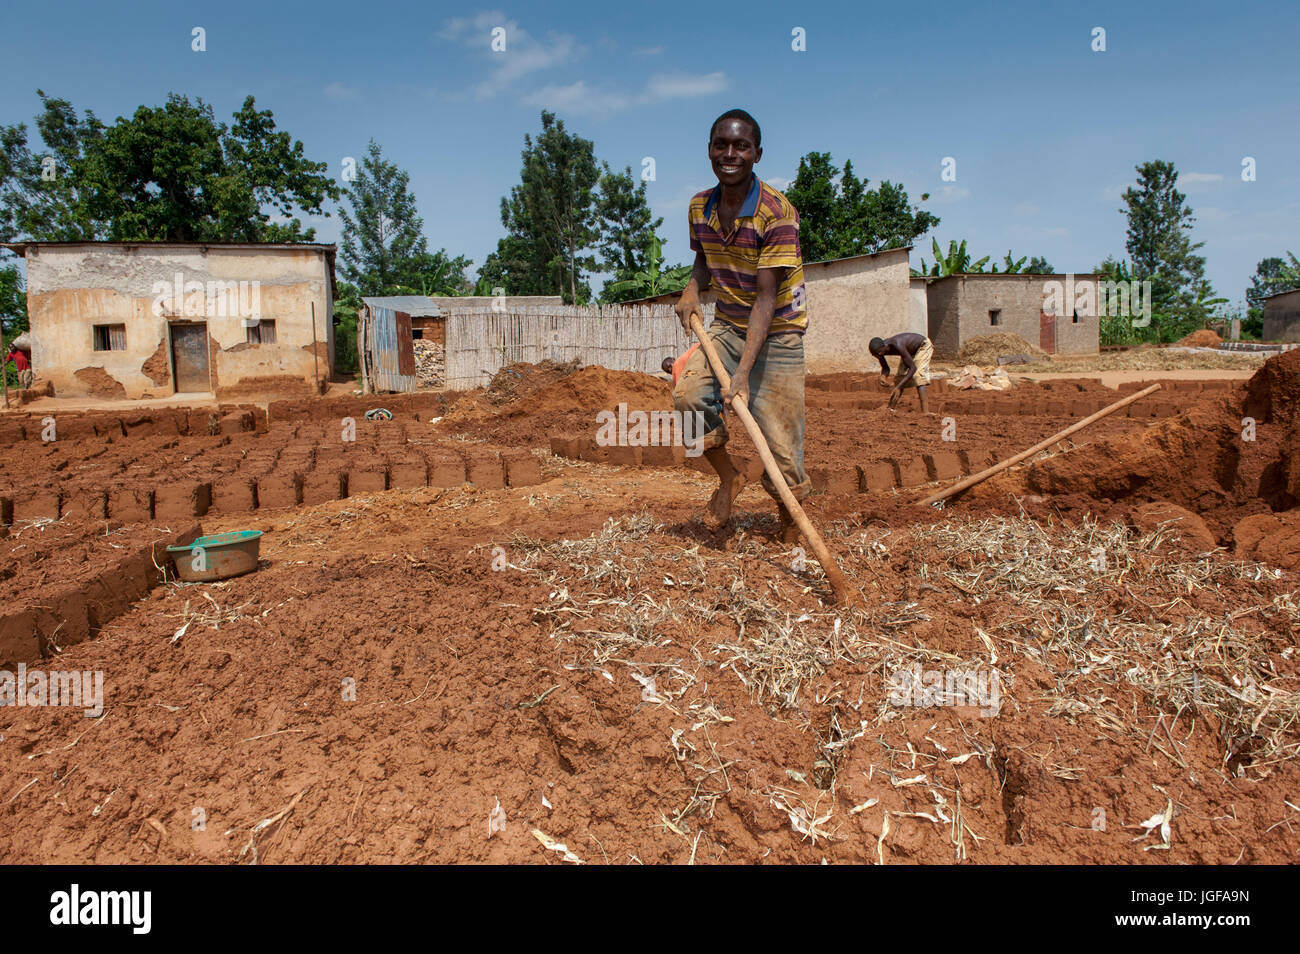 Making bricks out of clay and straw in a Rwandan village. Rwanda. Stock Photo